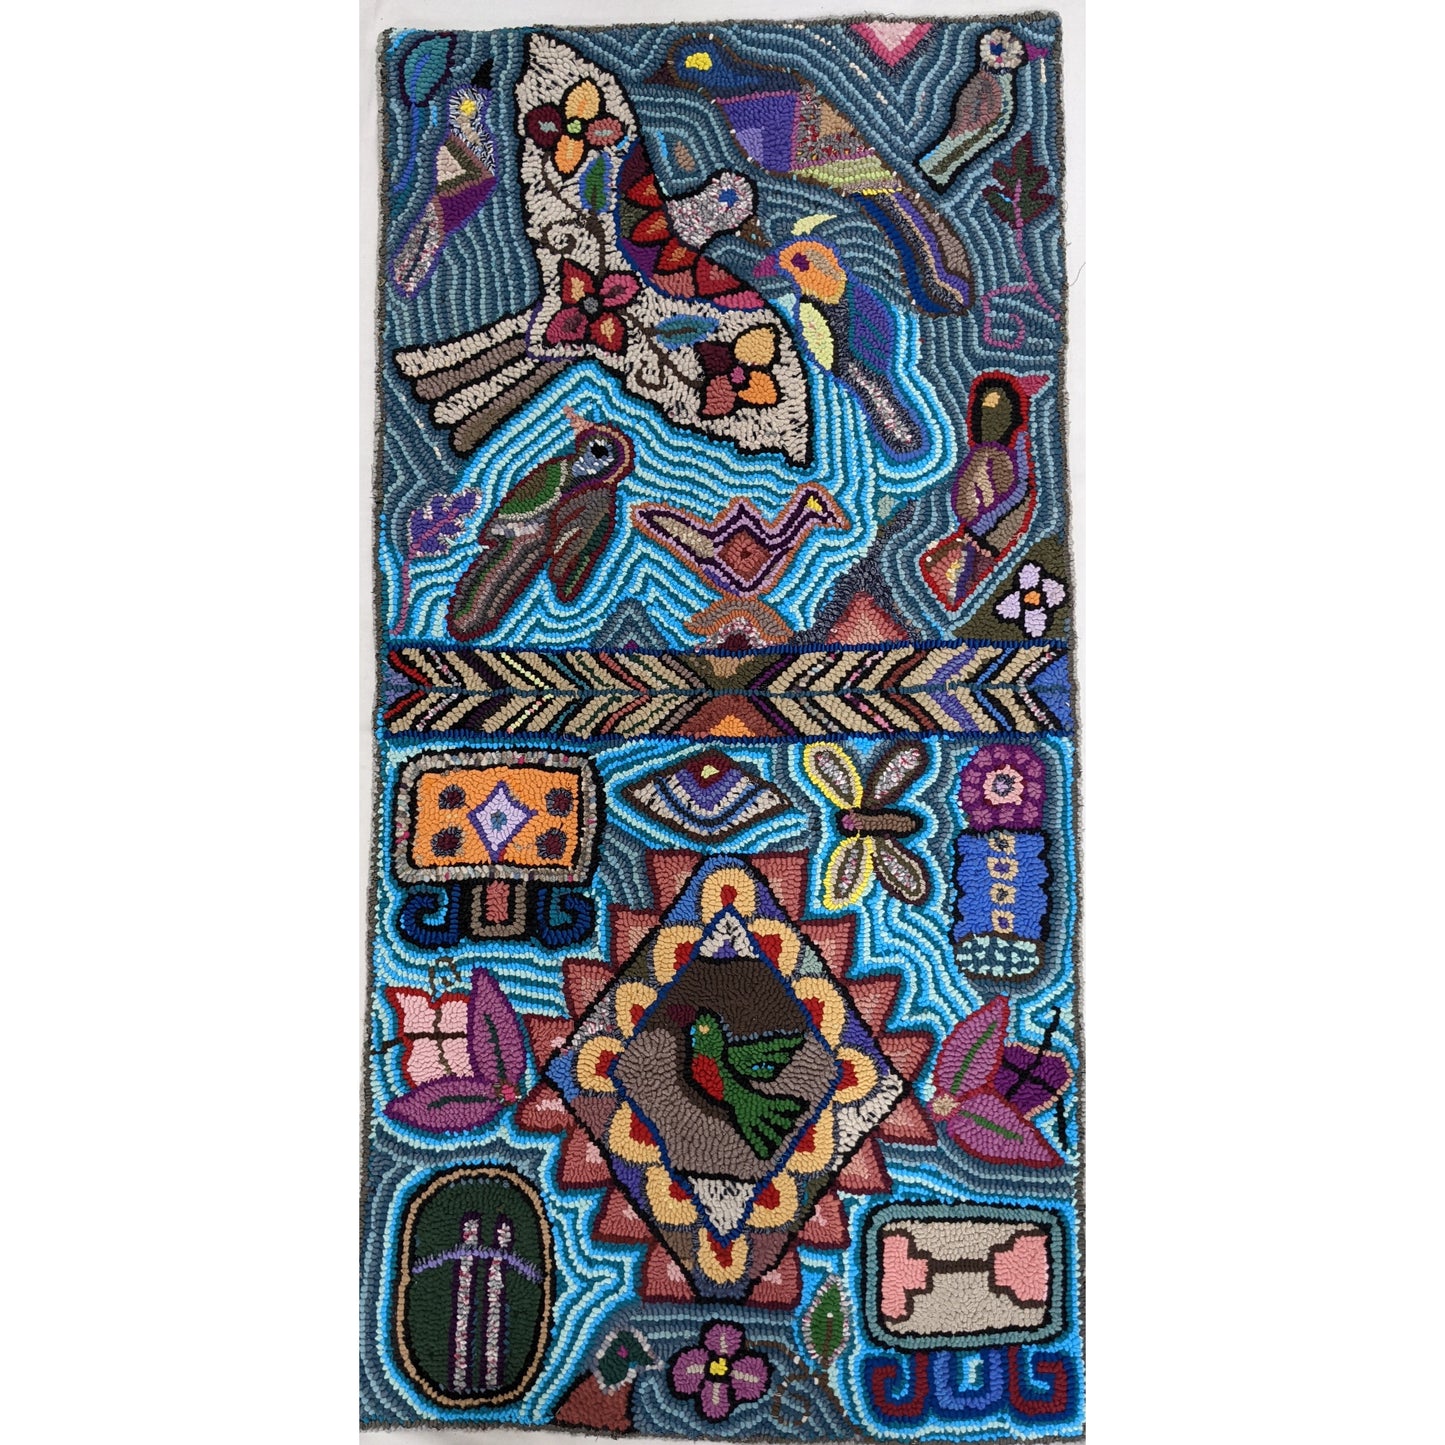 Guatemala, Multicolores, “Our Maya Heritage” Large Rug